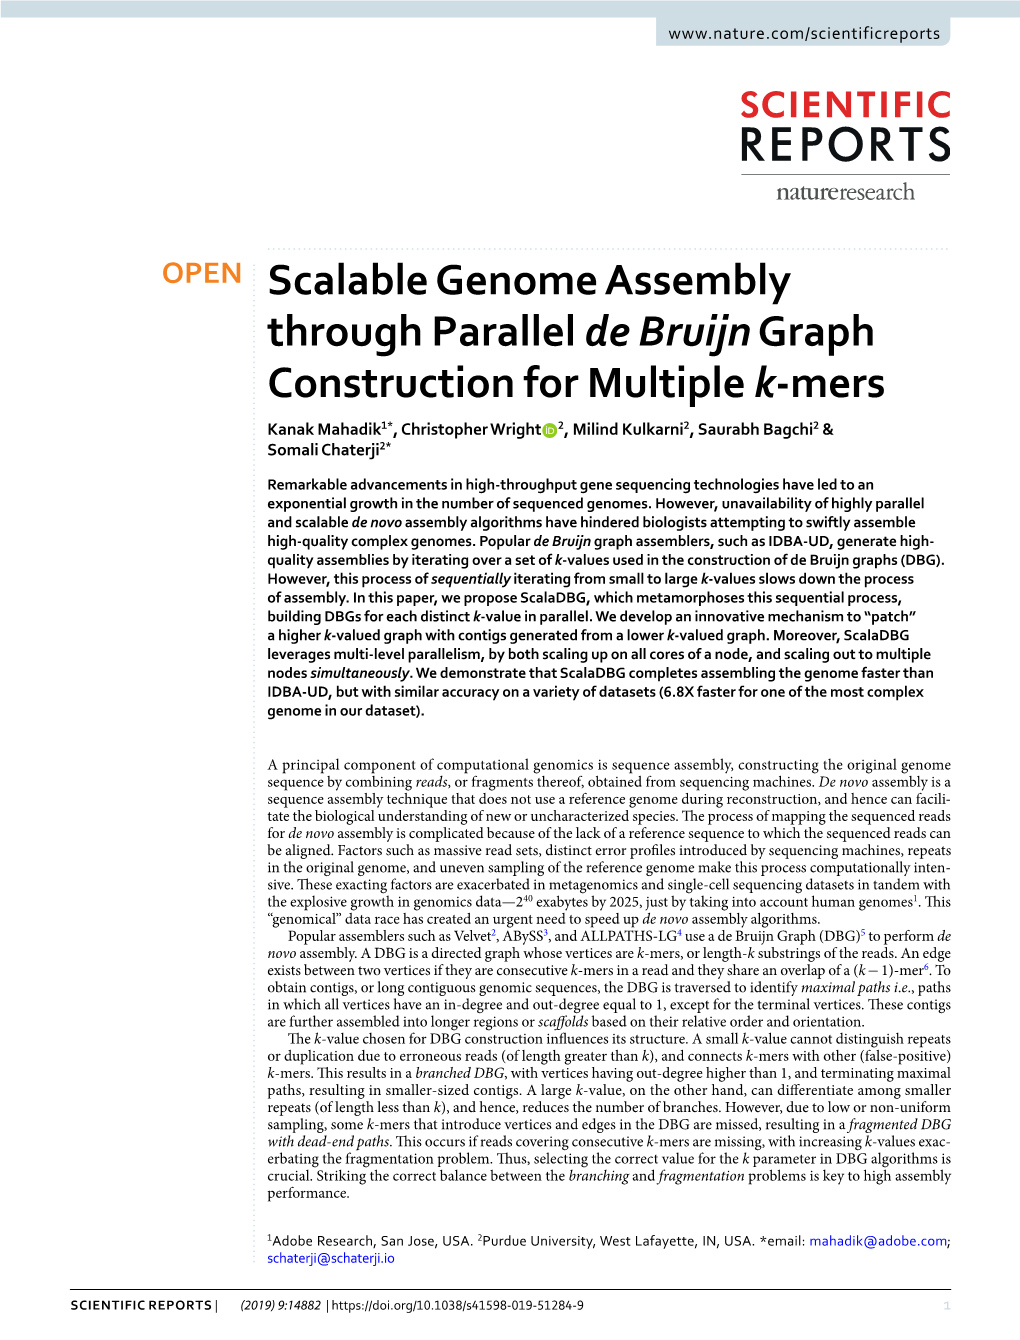 Scalable Genome Assembly Through Parallel De Bruijn Graph Construction for Multiple K-Mers